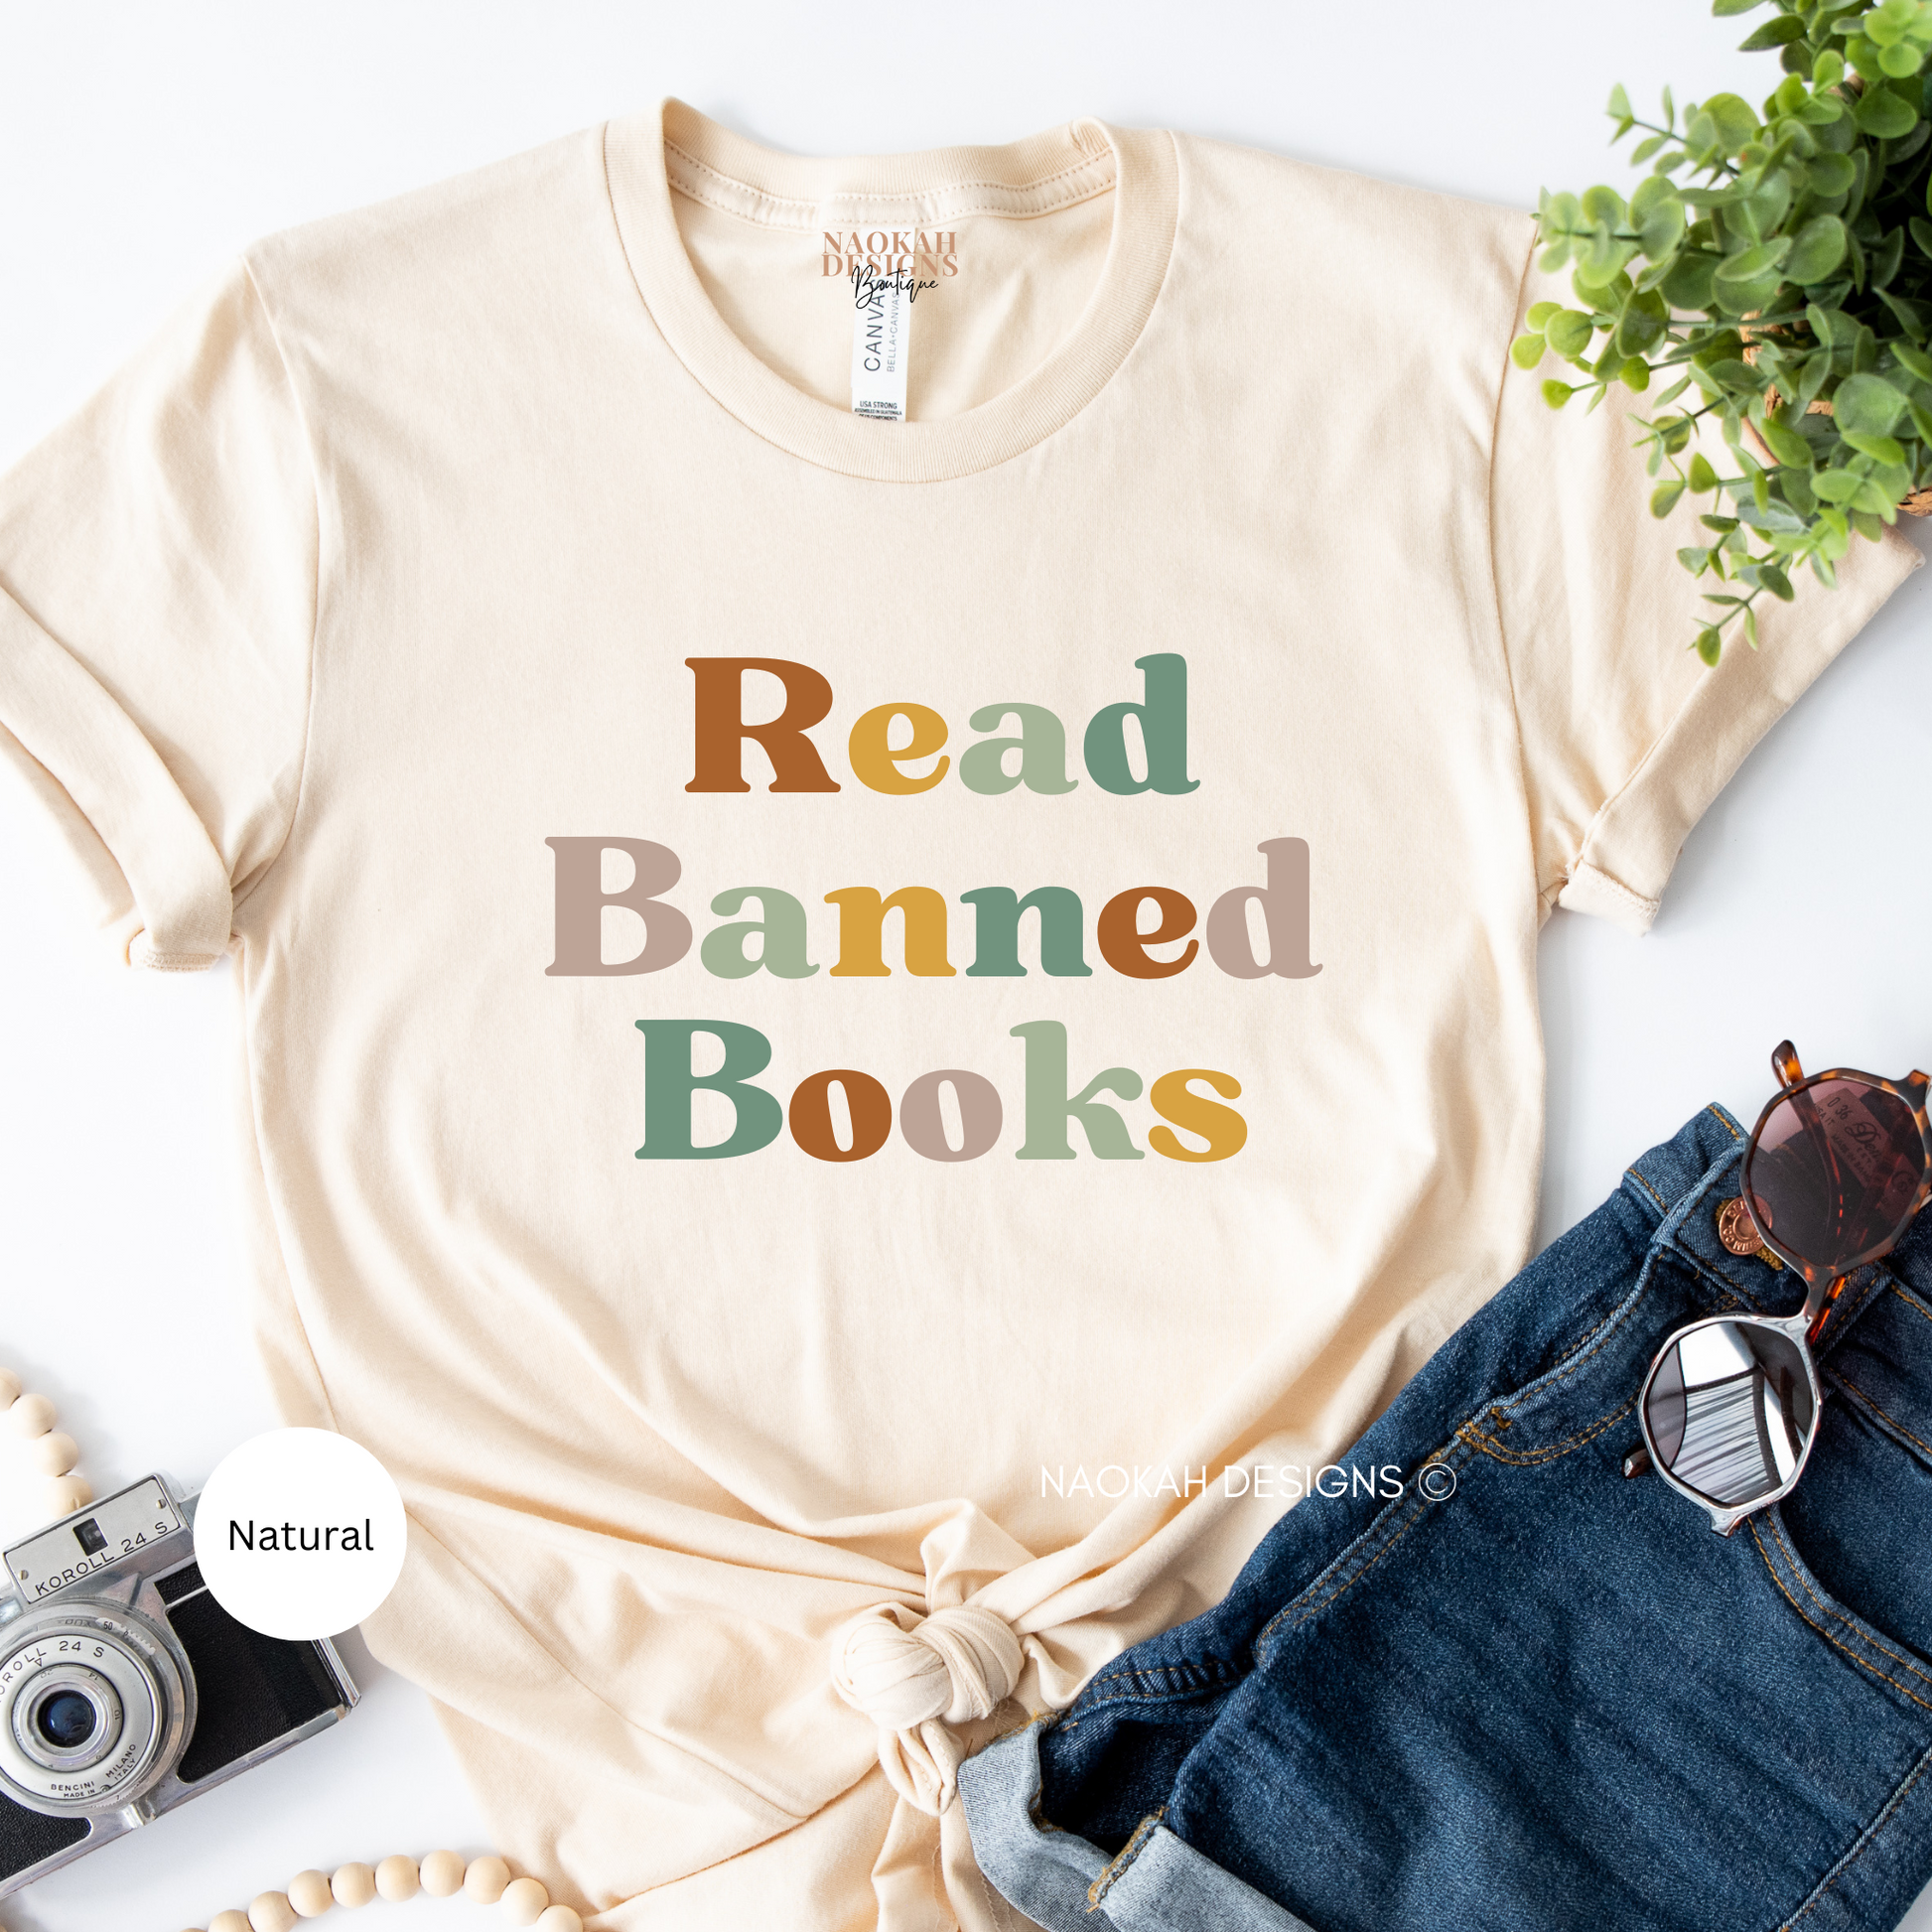 Read Banned Books Shirt, Librarian Shirt, Book Club Shirt, Bookish Shirt, Try Reading Book Instead Of Banning Them, Literature Shirt